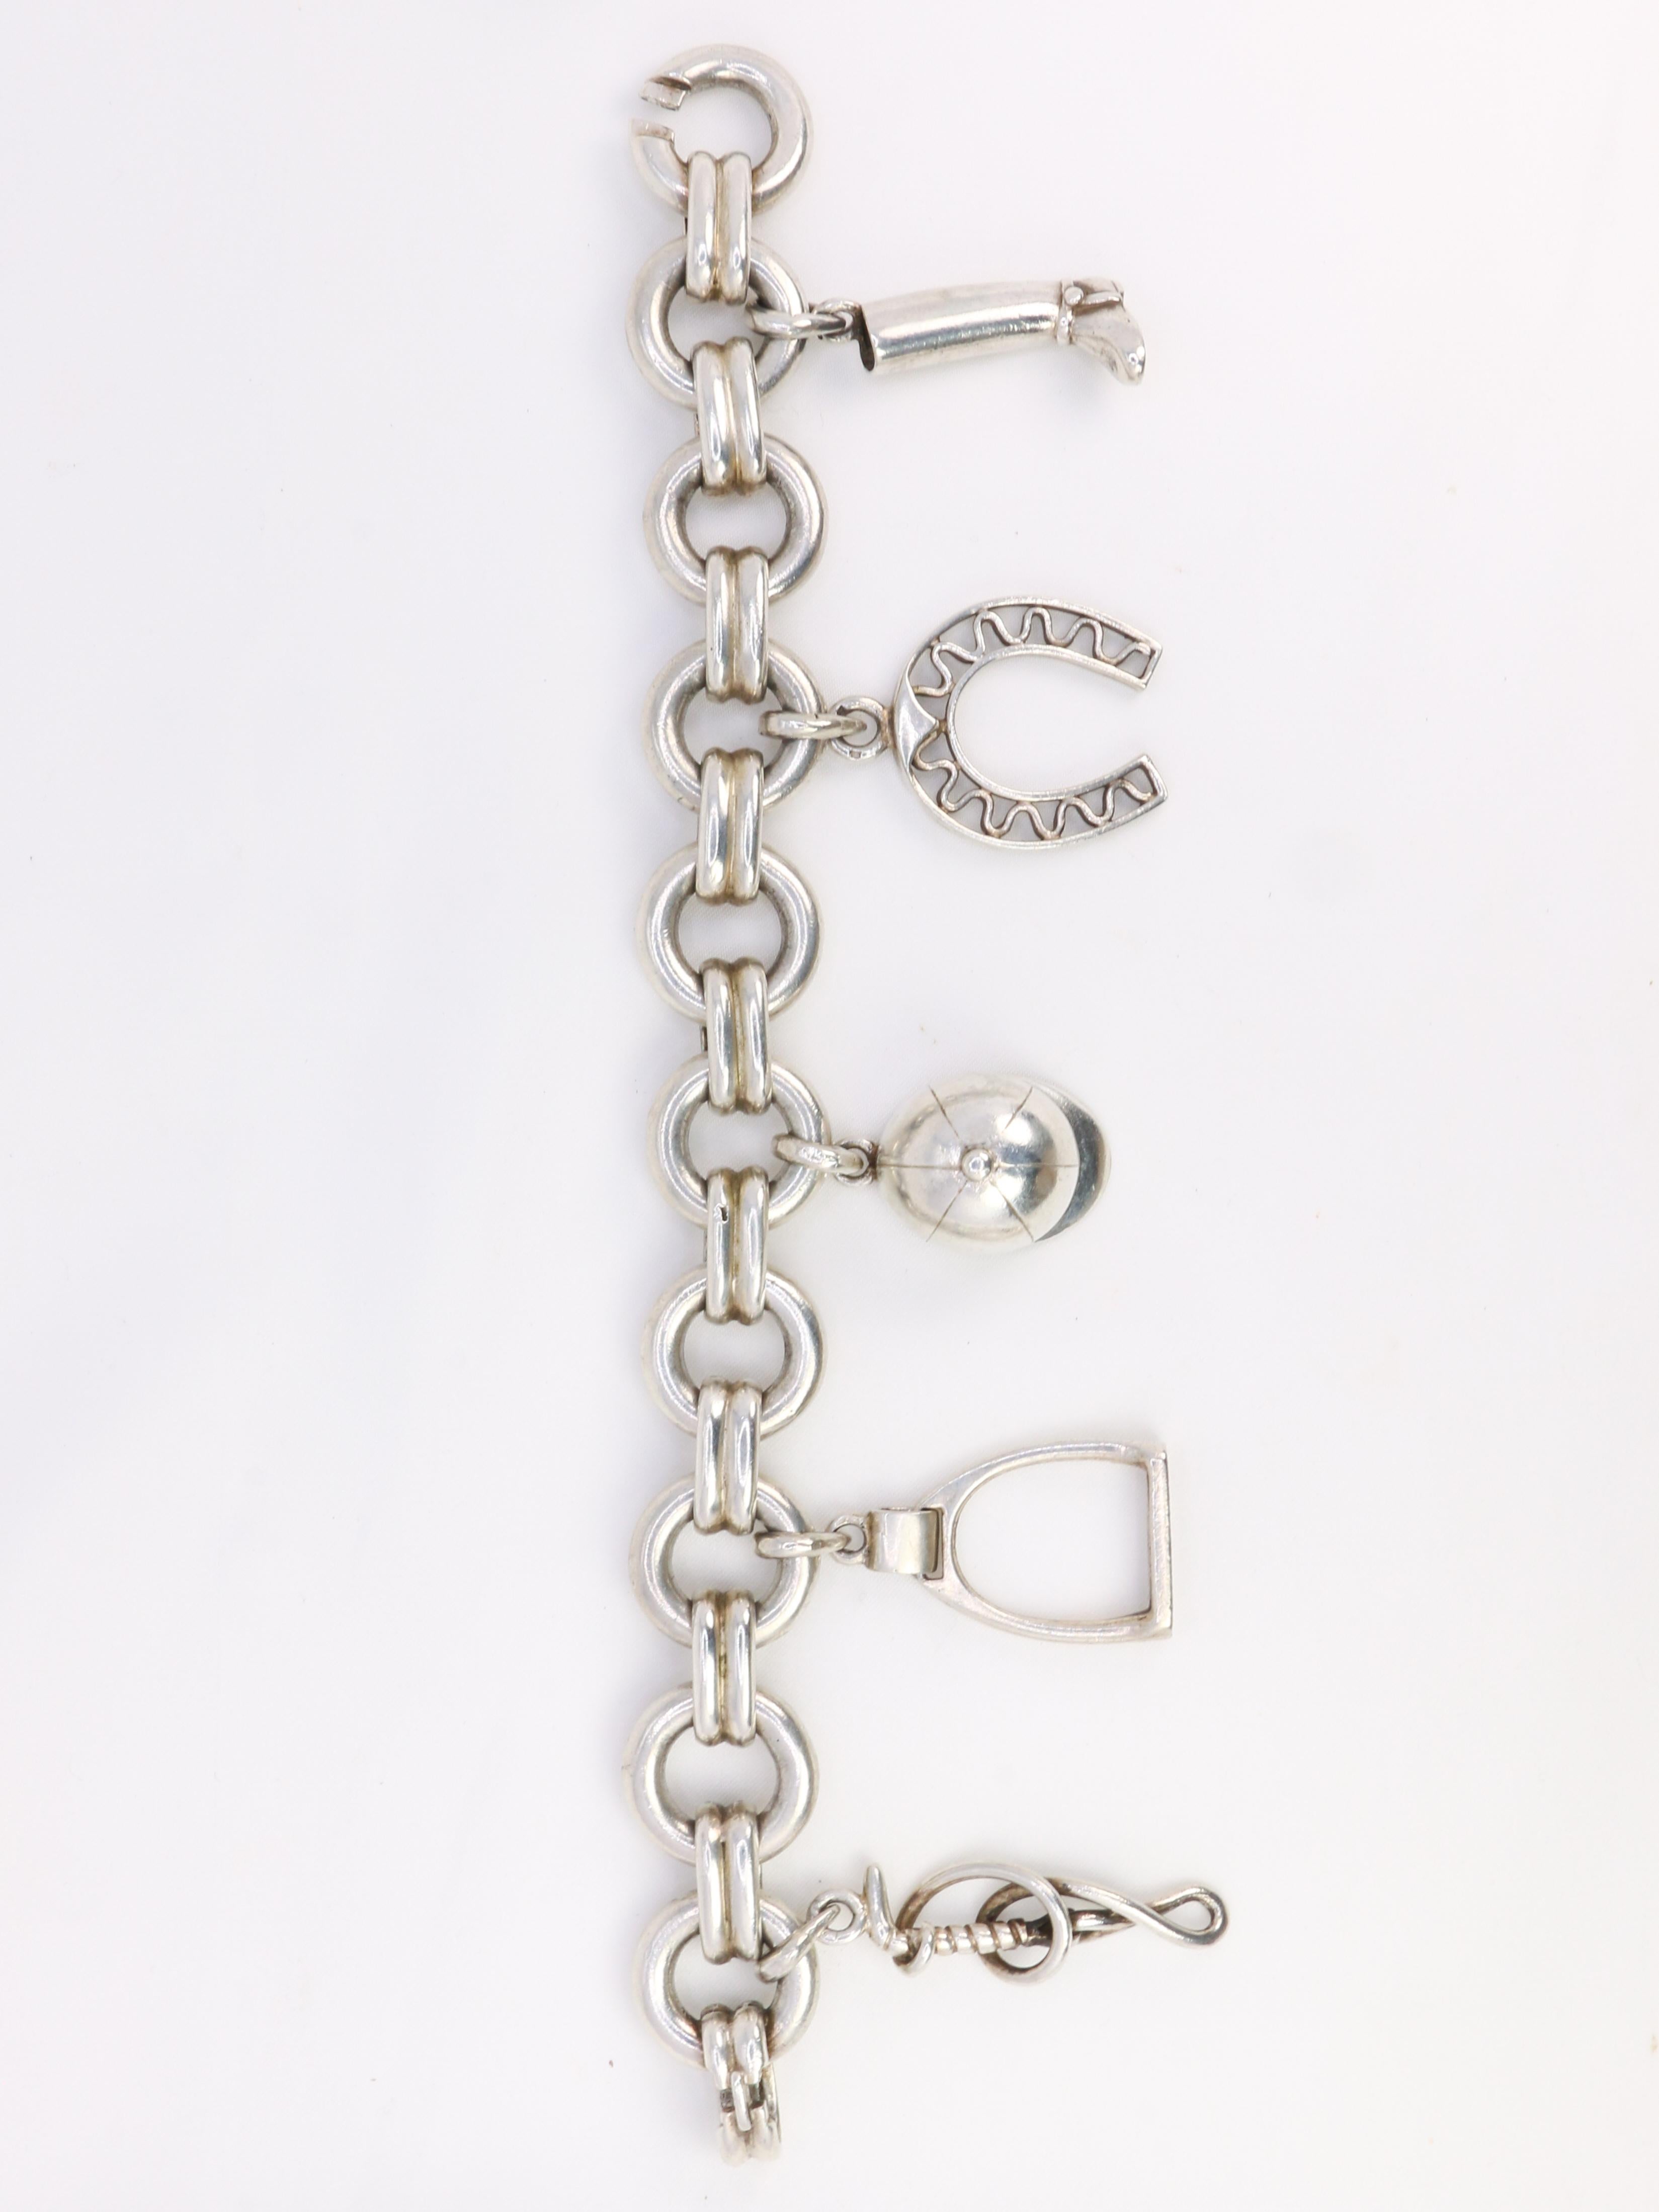 Gaétan de Percin (att. to HERMES) Silver bracelet and equestrian charms  For Sale 7